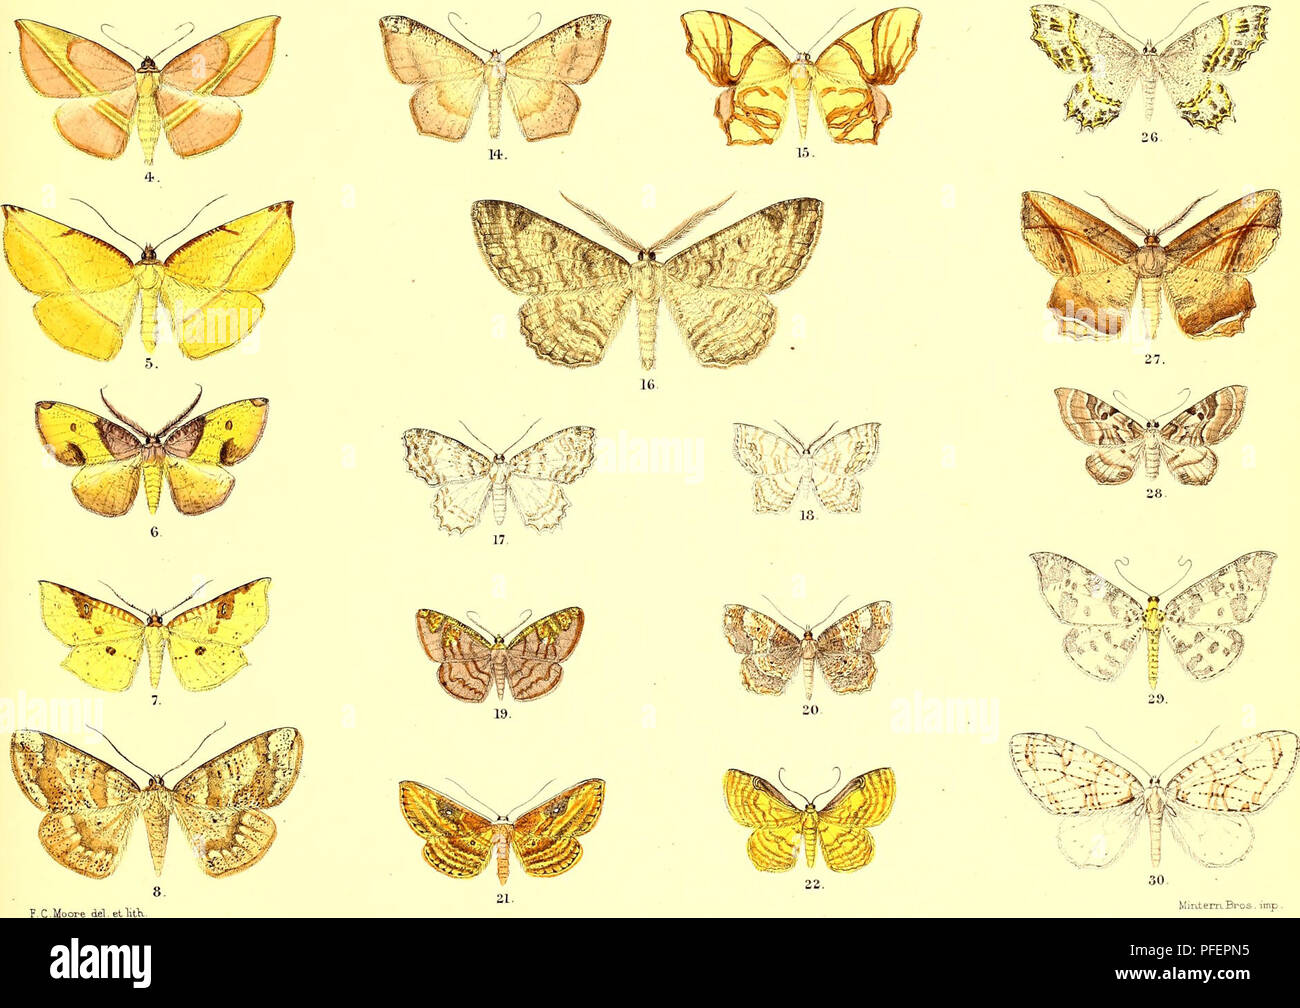 . Descriptions of new Indian lepidopterous insects from the collection of the late Mr. W.S. Atkinson. Lepidoptera -- India; Lepidoptera. 1, Decetiapallida. ?,,Noreia flava. &lt;3,Auzeareticulata. 4,Cimicod£s sanguiflua. S, C flava,?. e', Marcala flaviflisata. 7, Caustoloma acuLipennis. 8 Anisodes lunulosa. S.Meiiophravialis .10,Remodes lineosa. Yl] R.abnormis. 12,Brabira pallida. 13,Runeca fernlmeata 14, Macana deletaria. 15, Agathia divancata. IG, Mcis vagans 17 Tiy6odes fernfera. 18,Emodesa smuosa. 19. Steganiapurpurascens. 20,Epione adustata. 2l! Arasada fasciosa. 22,Bardanes plicata. 23.Me Stock Photo